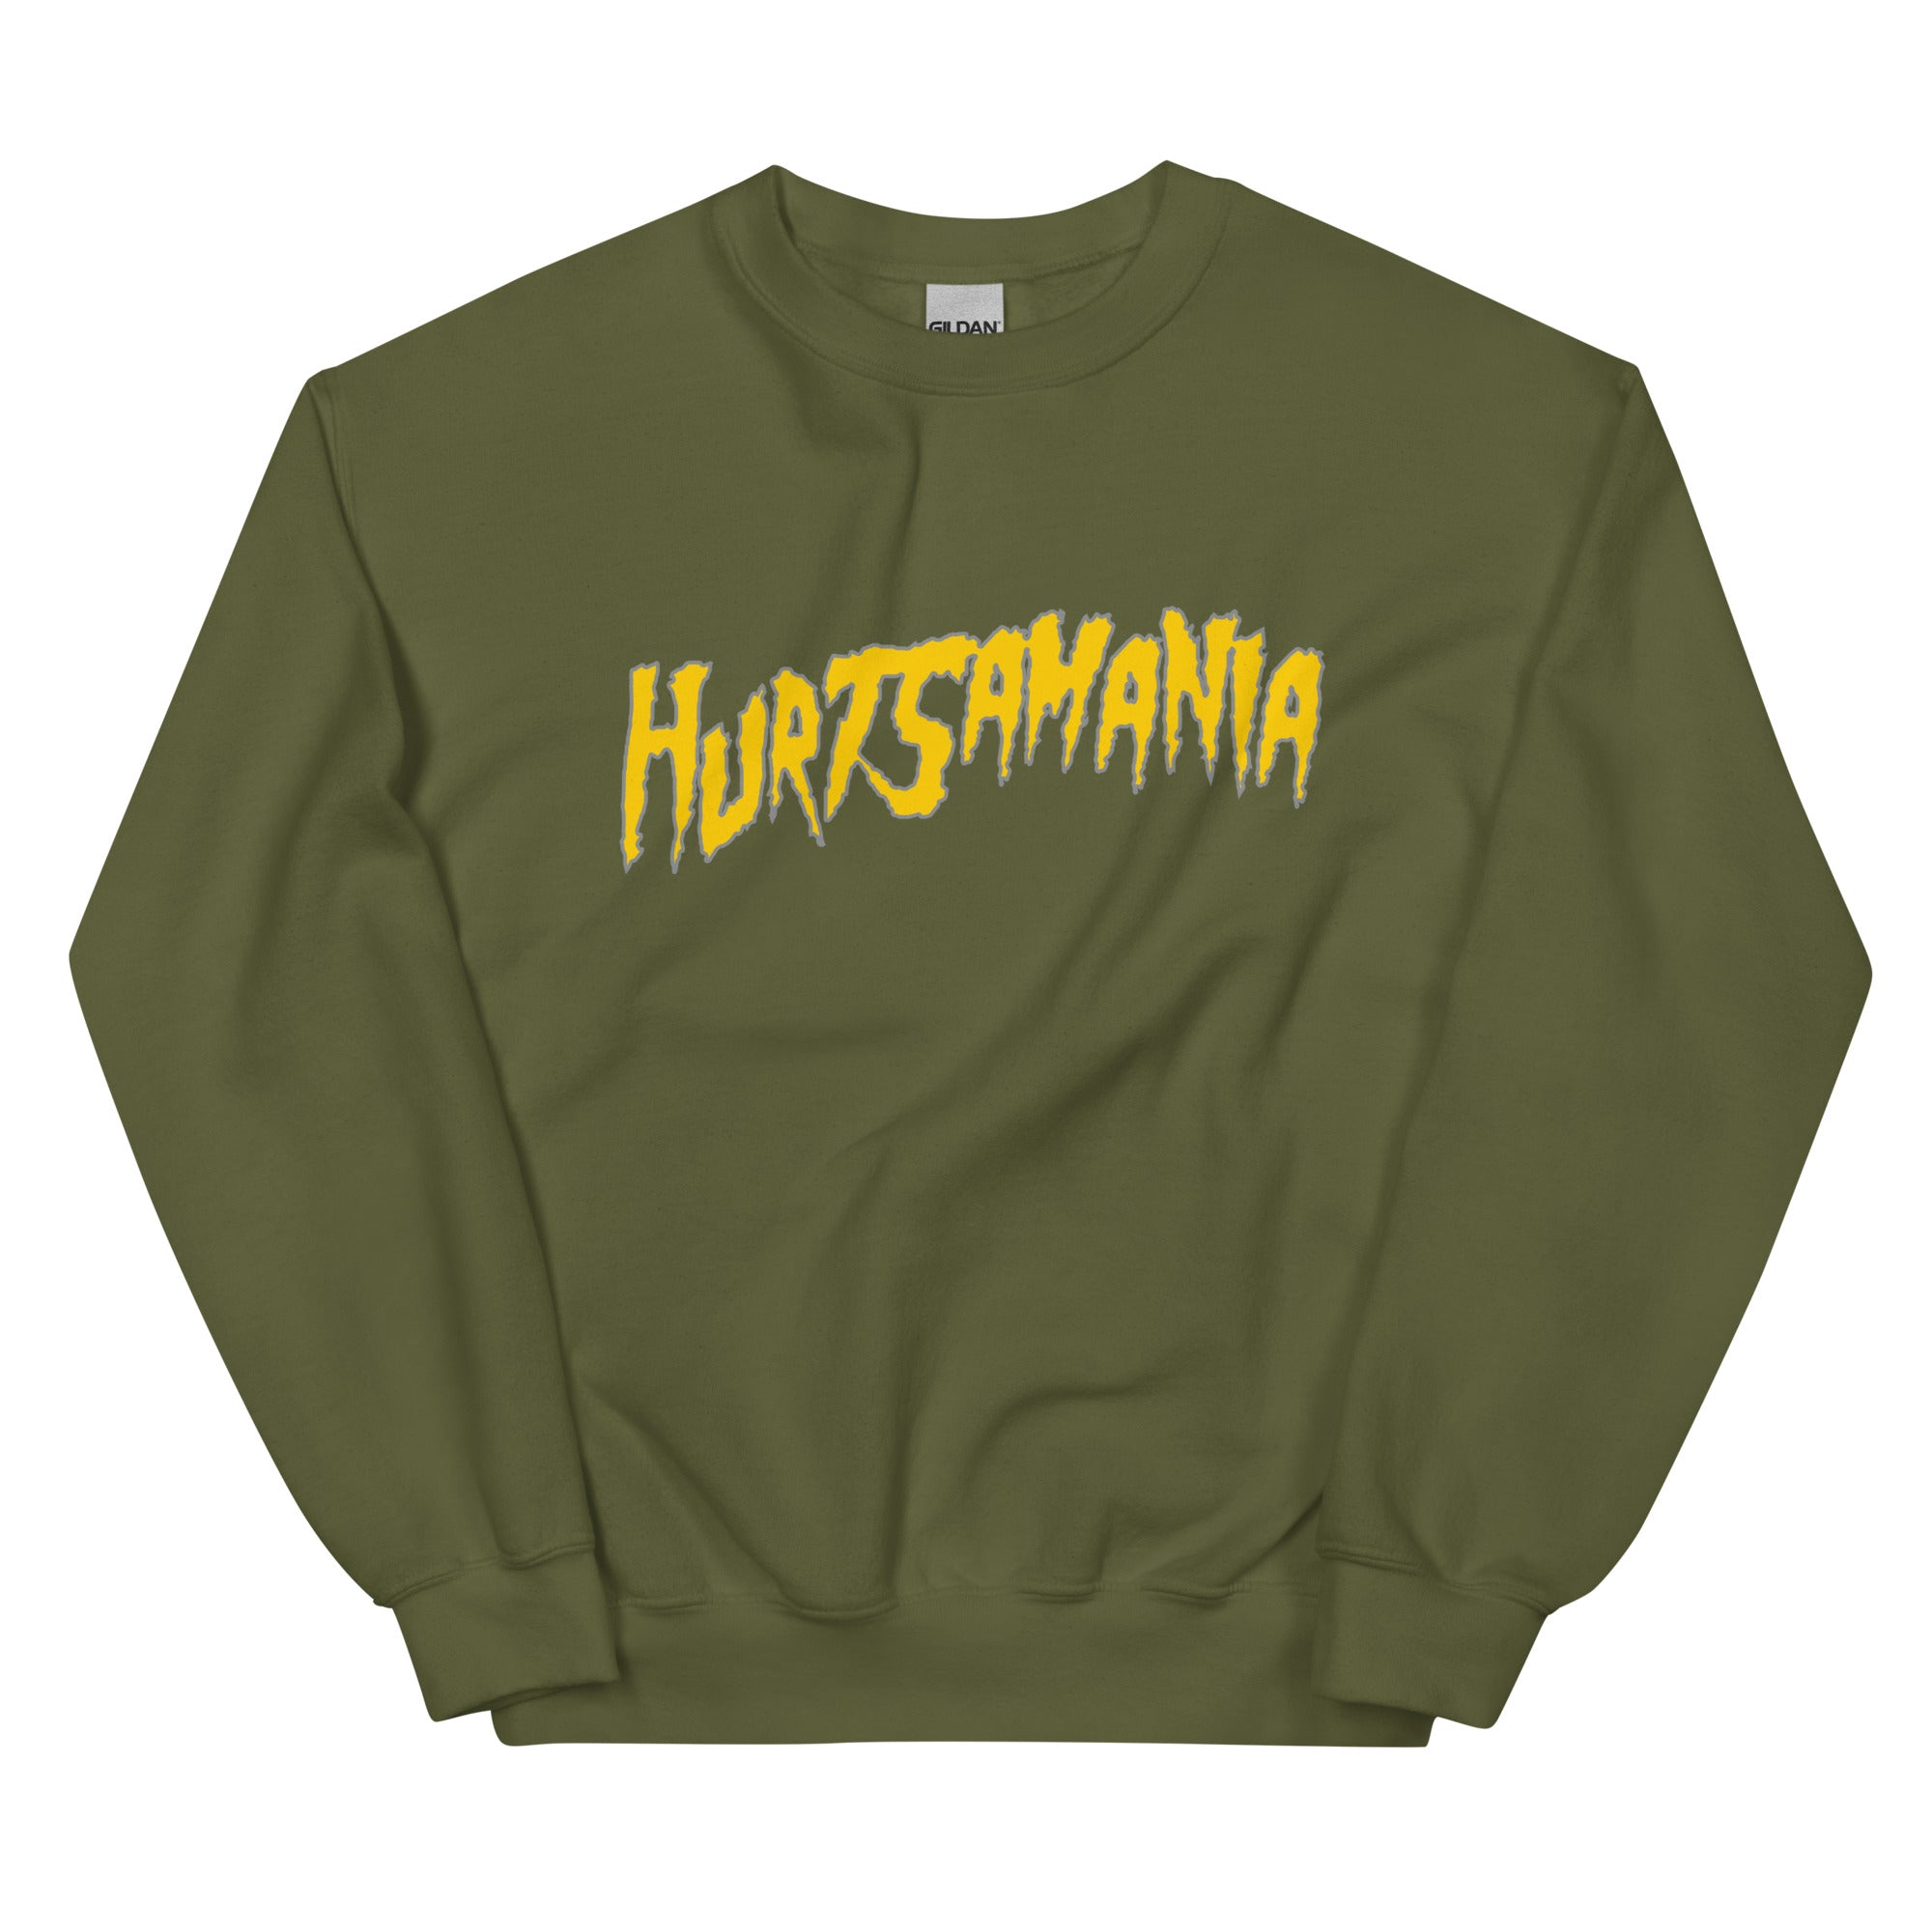 "Hurtsamania" Sweatshirt